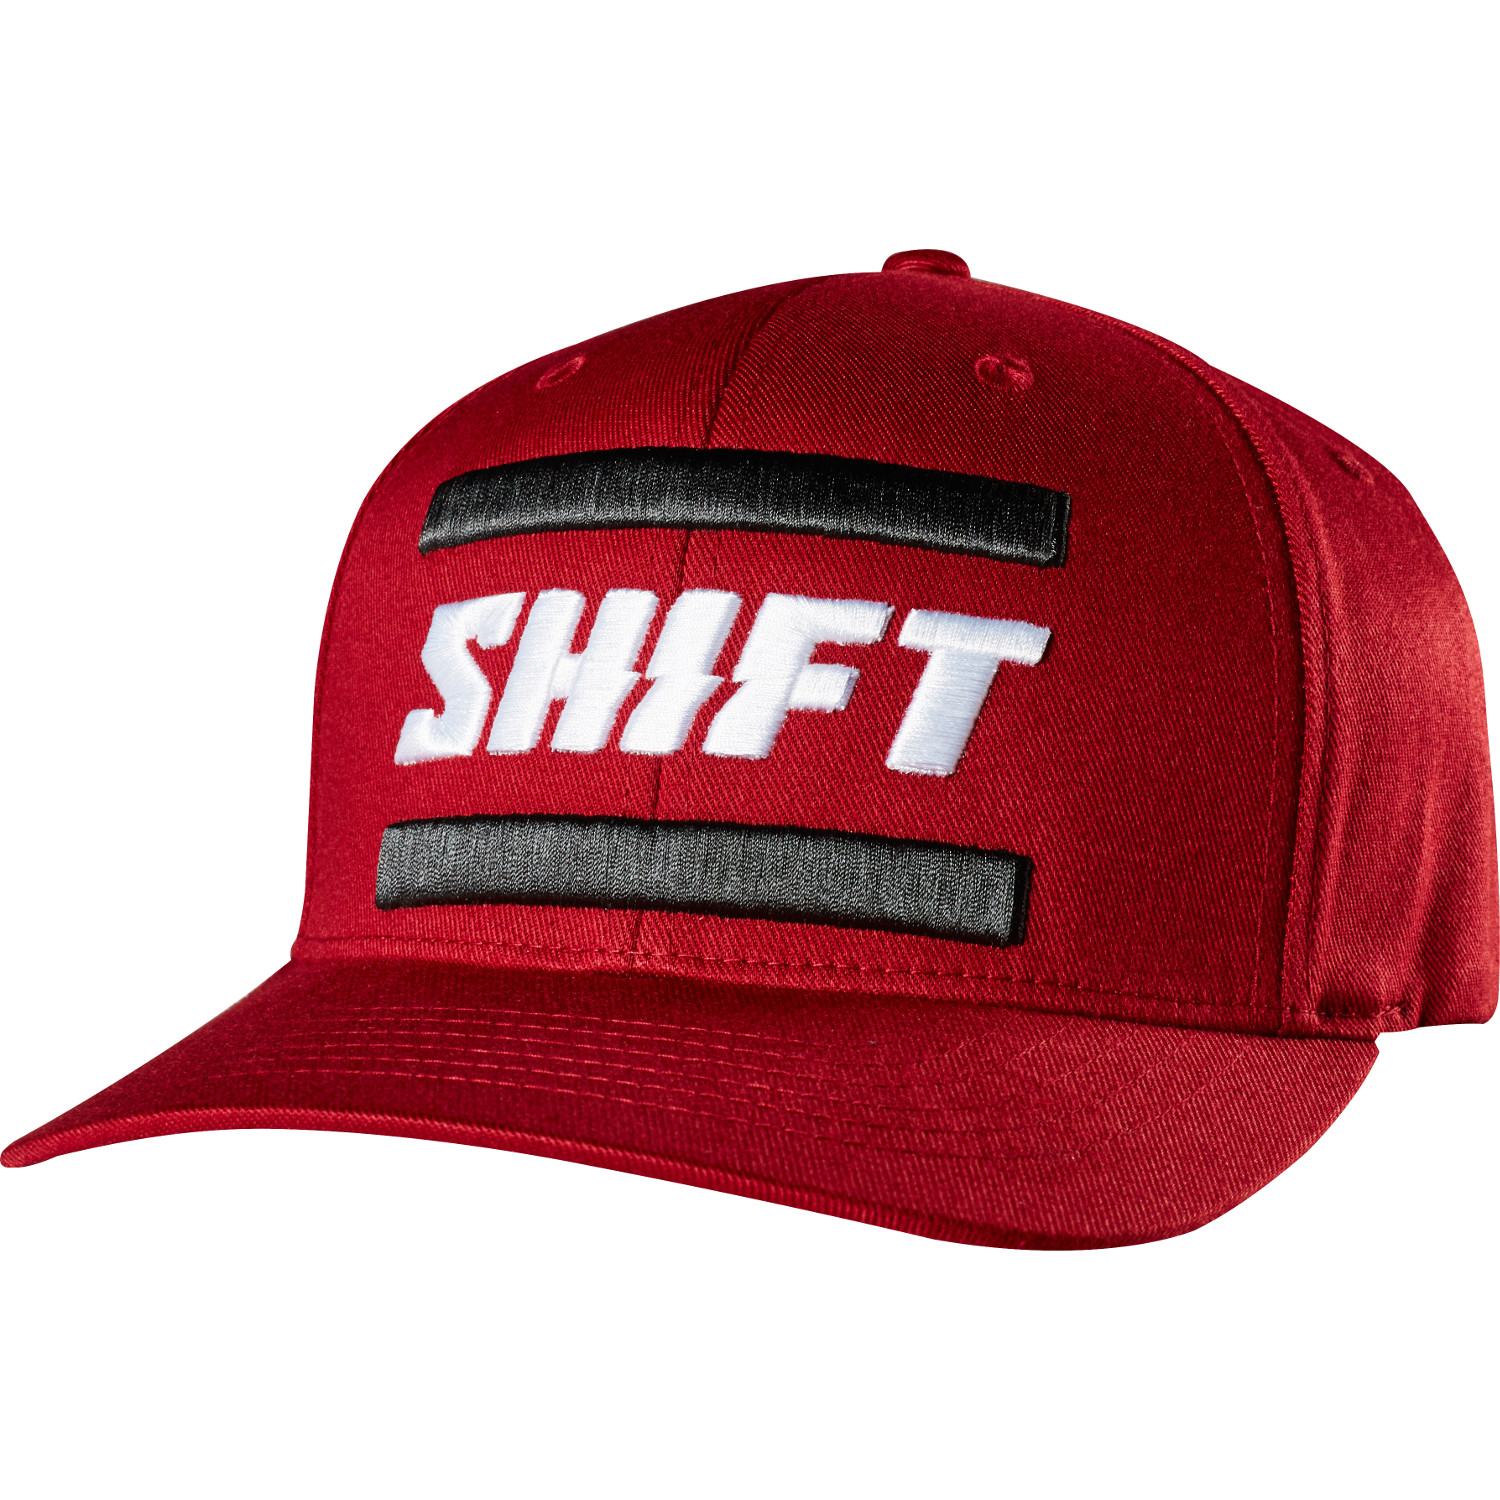 Shift Flexfit Cap 3lack Label Dark Red